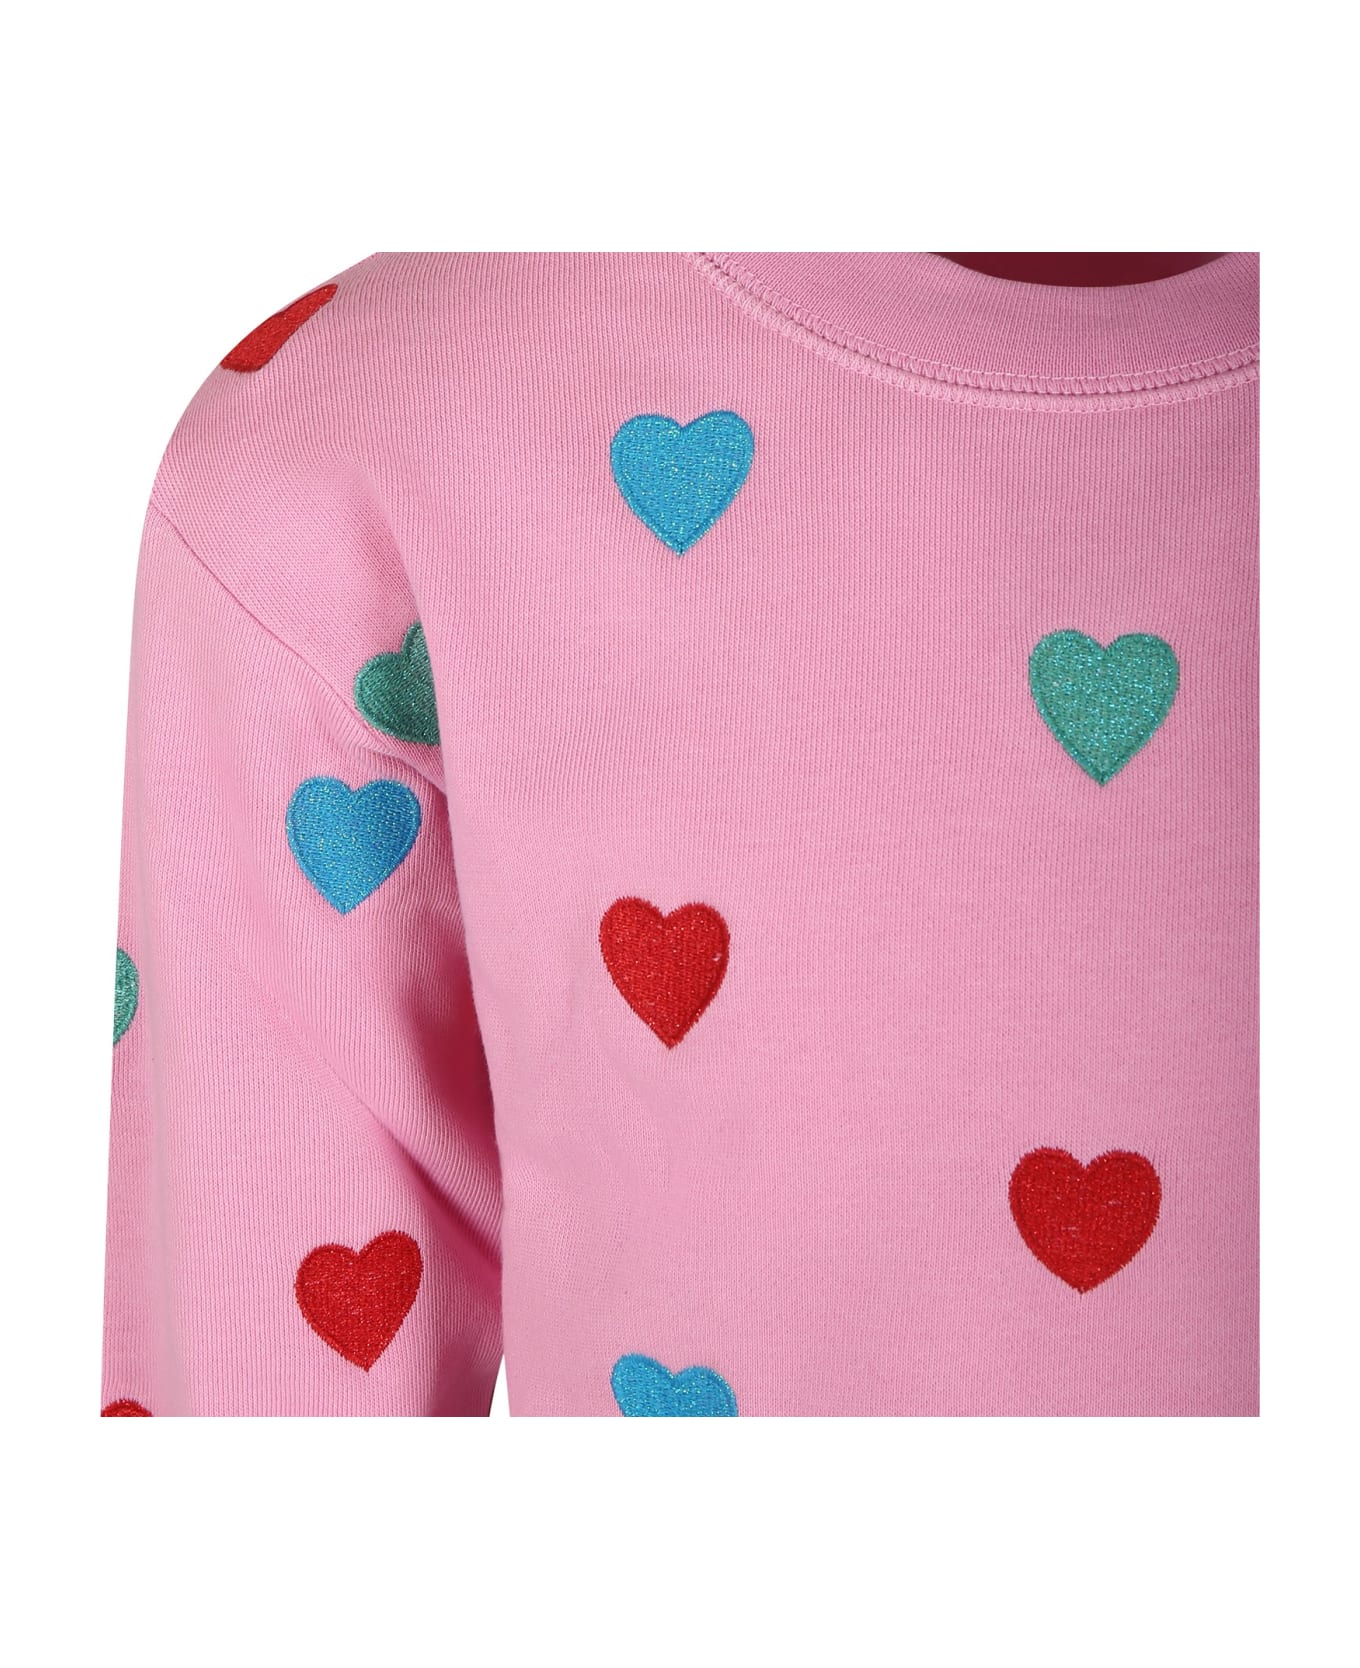 Stella McCartney Kids Pink Sweatshirt For Girl With Hearts - Pink